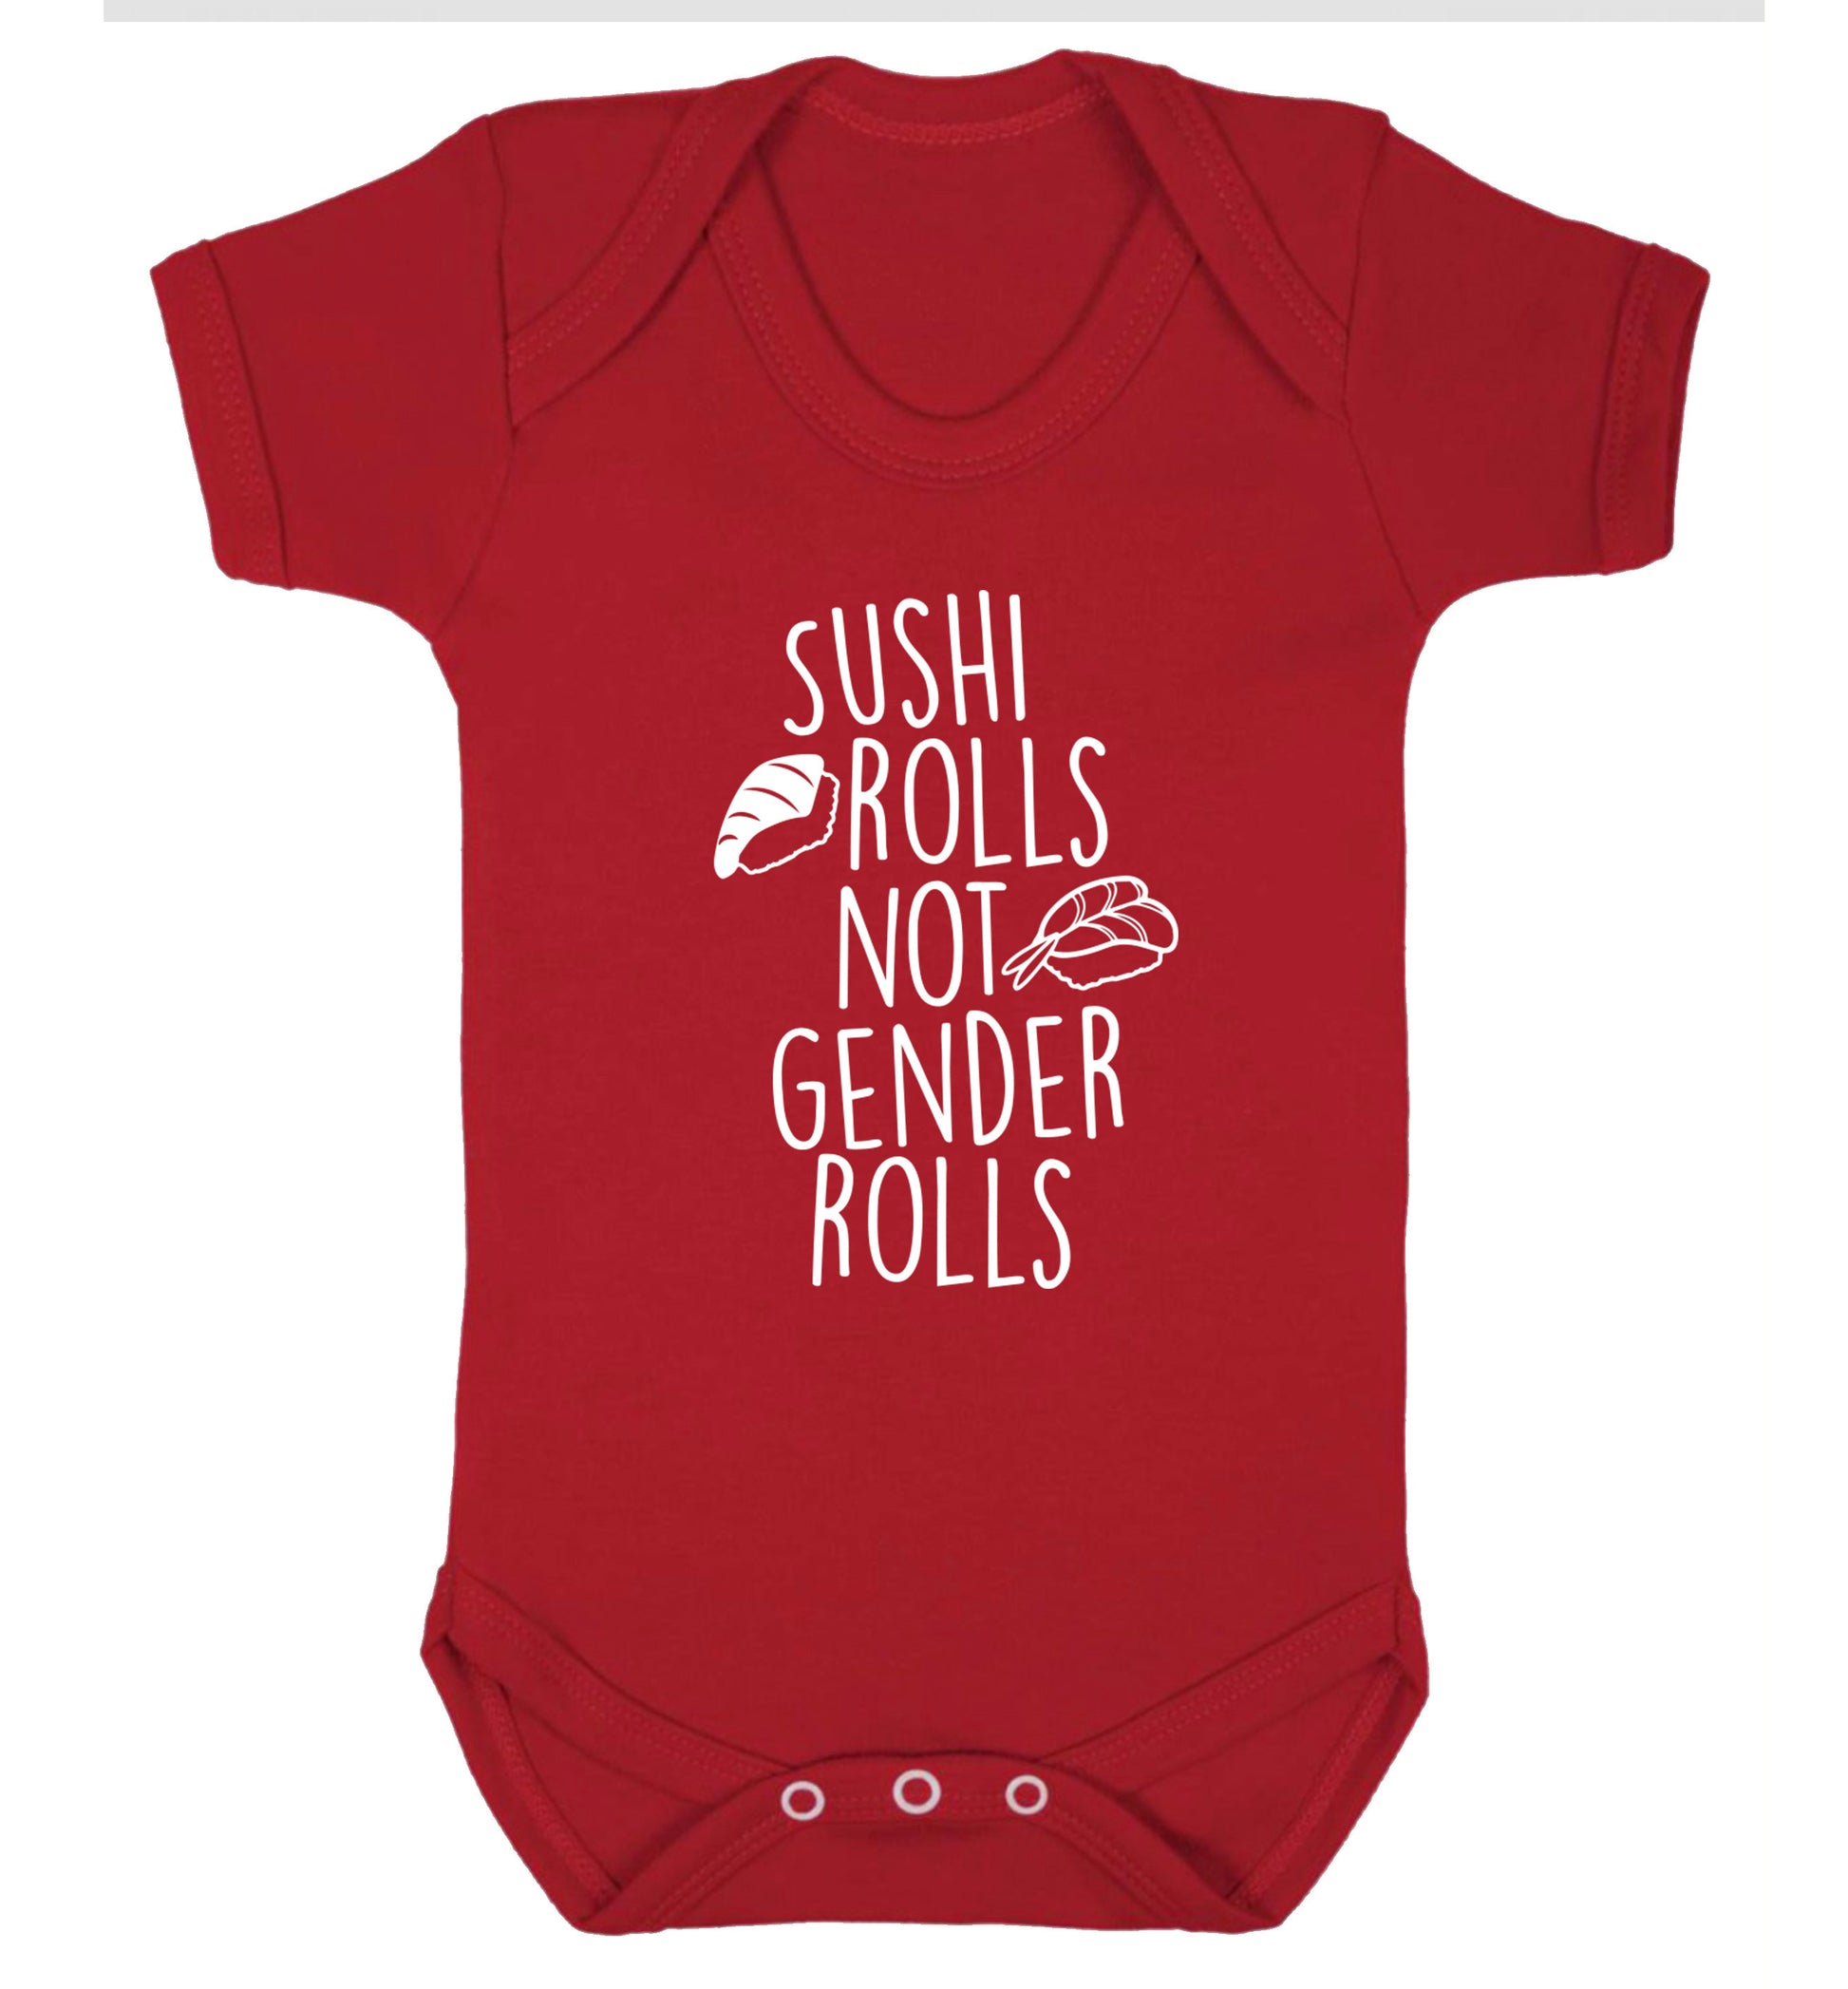 Sushi rolls not gender rolls Baby Vest red 18-24 months